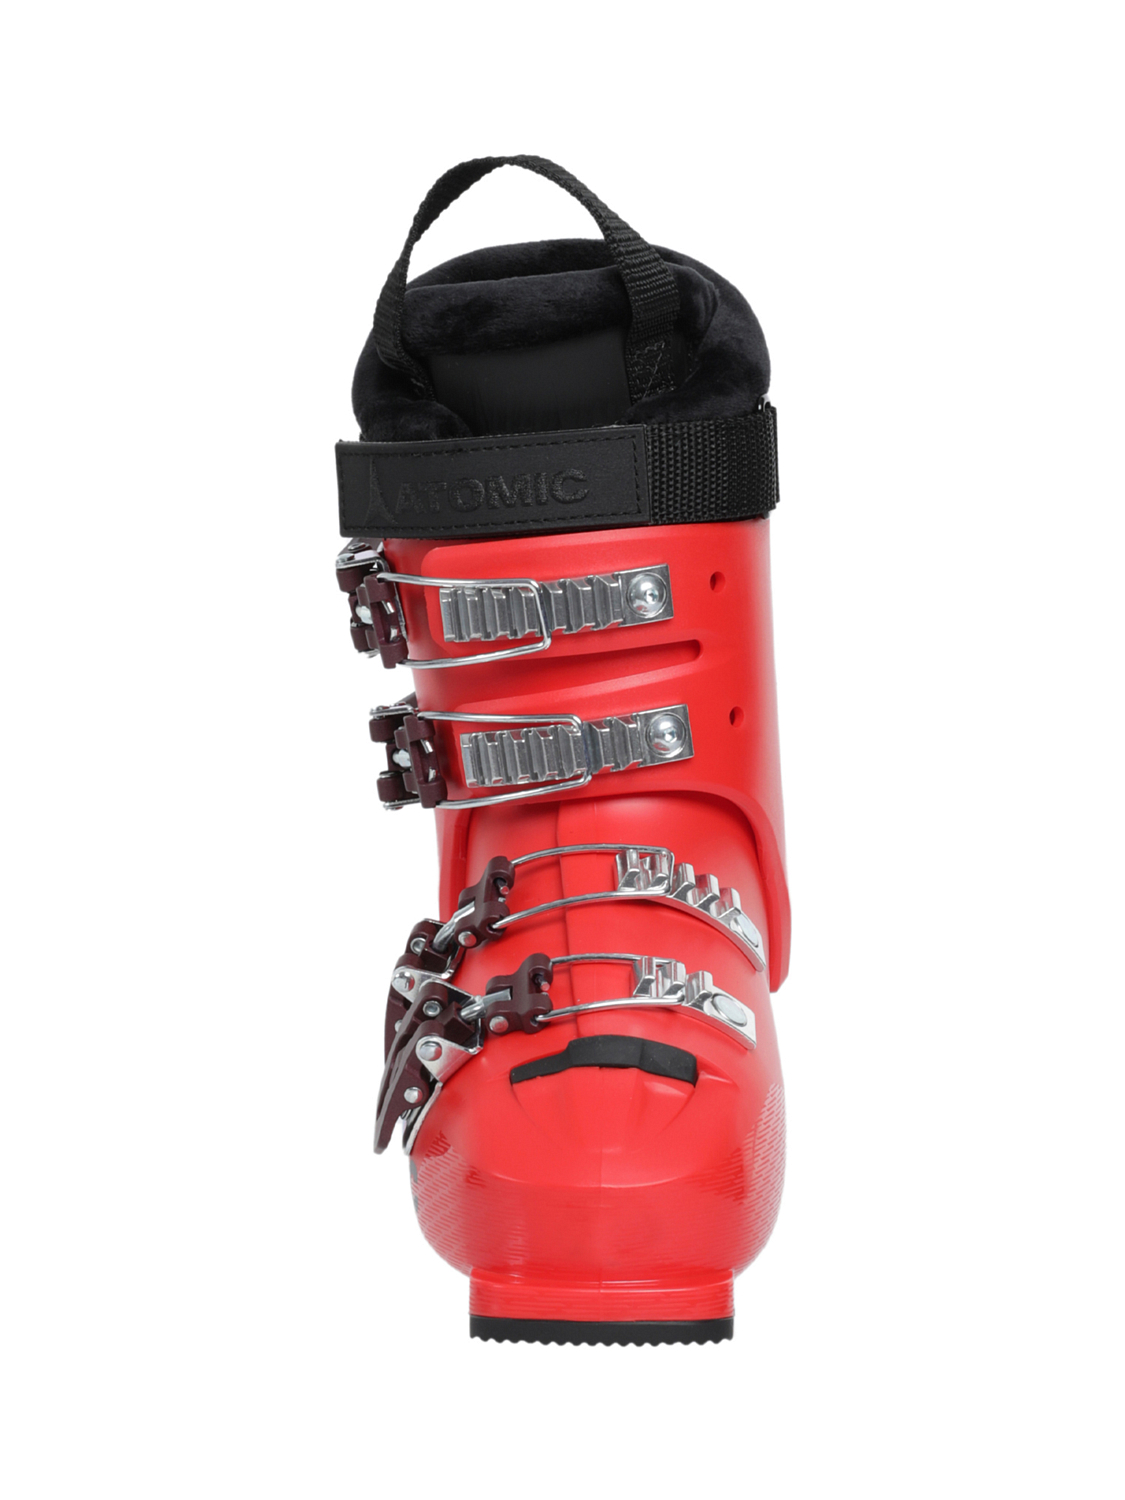 Горнолыжные ботинки ATOMIC Redster JR 60 red/black